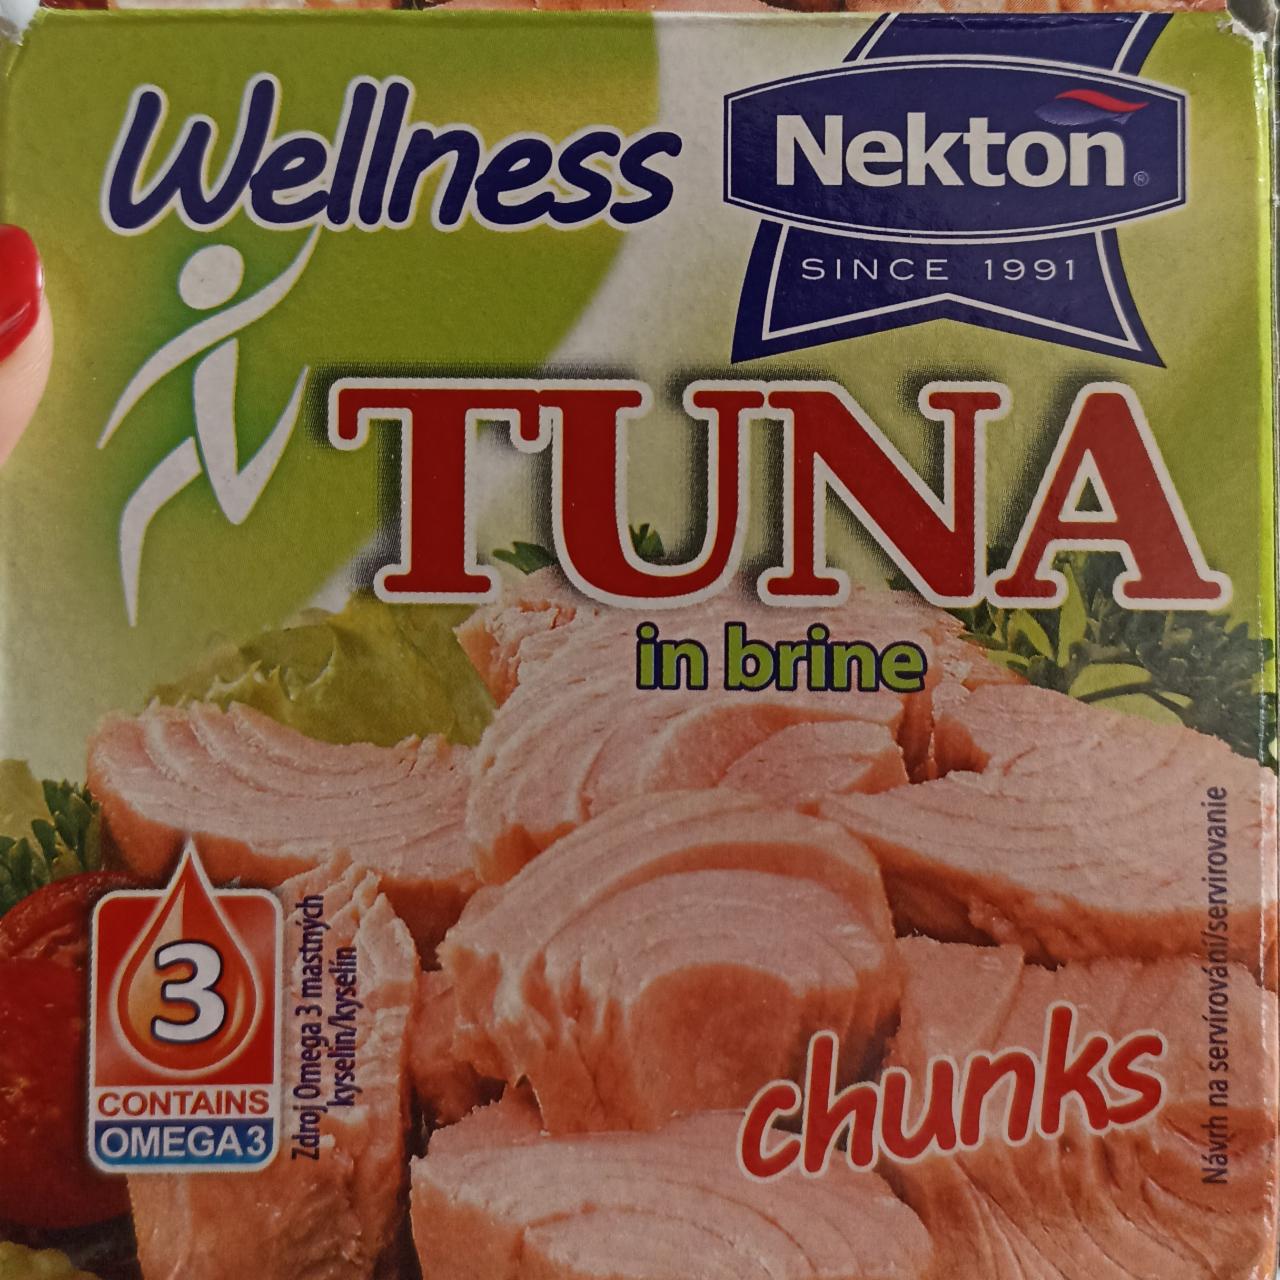 Fotografie - Wellness Tuna chunks in brine Nekton